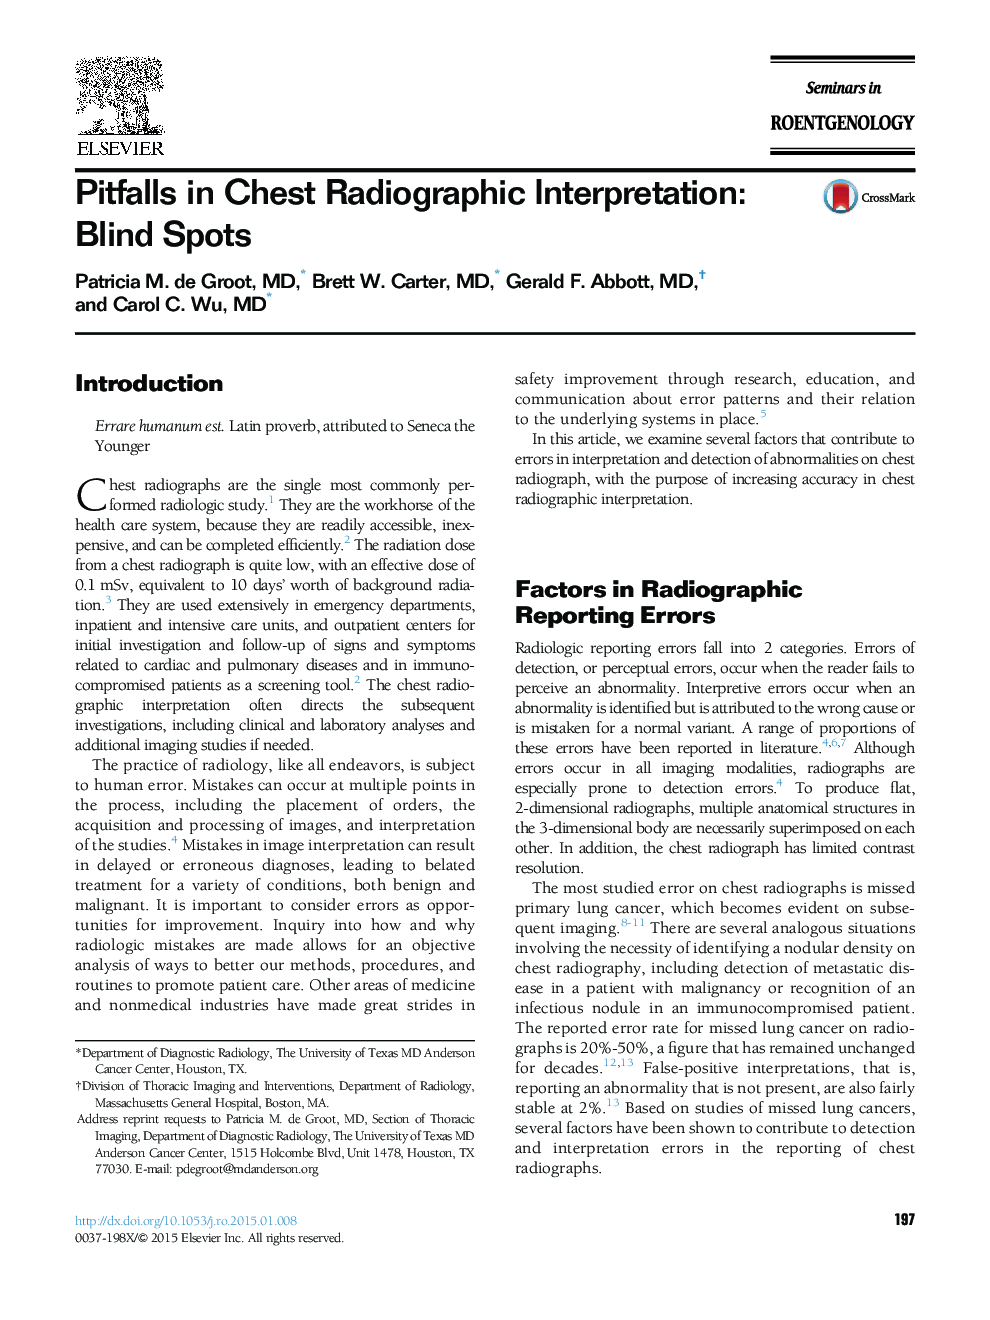 Pitfalls in Chest Radiographic Interpretation: Blind Spots